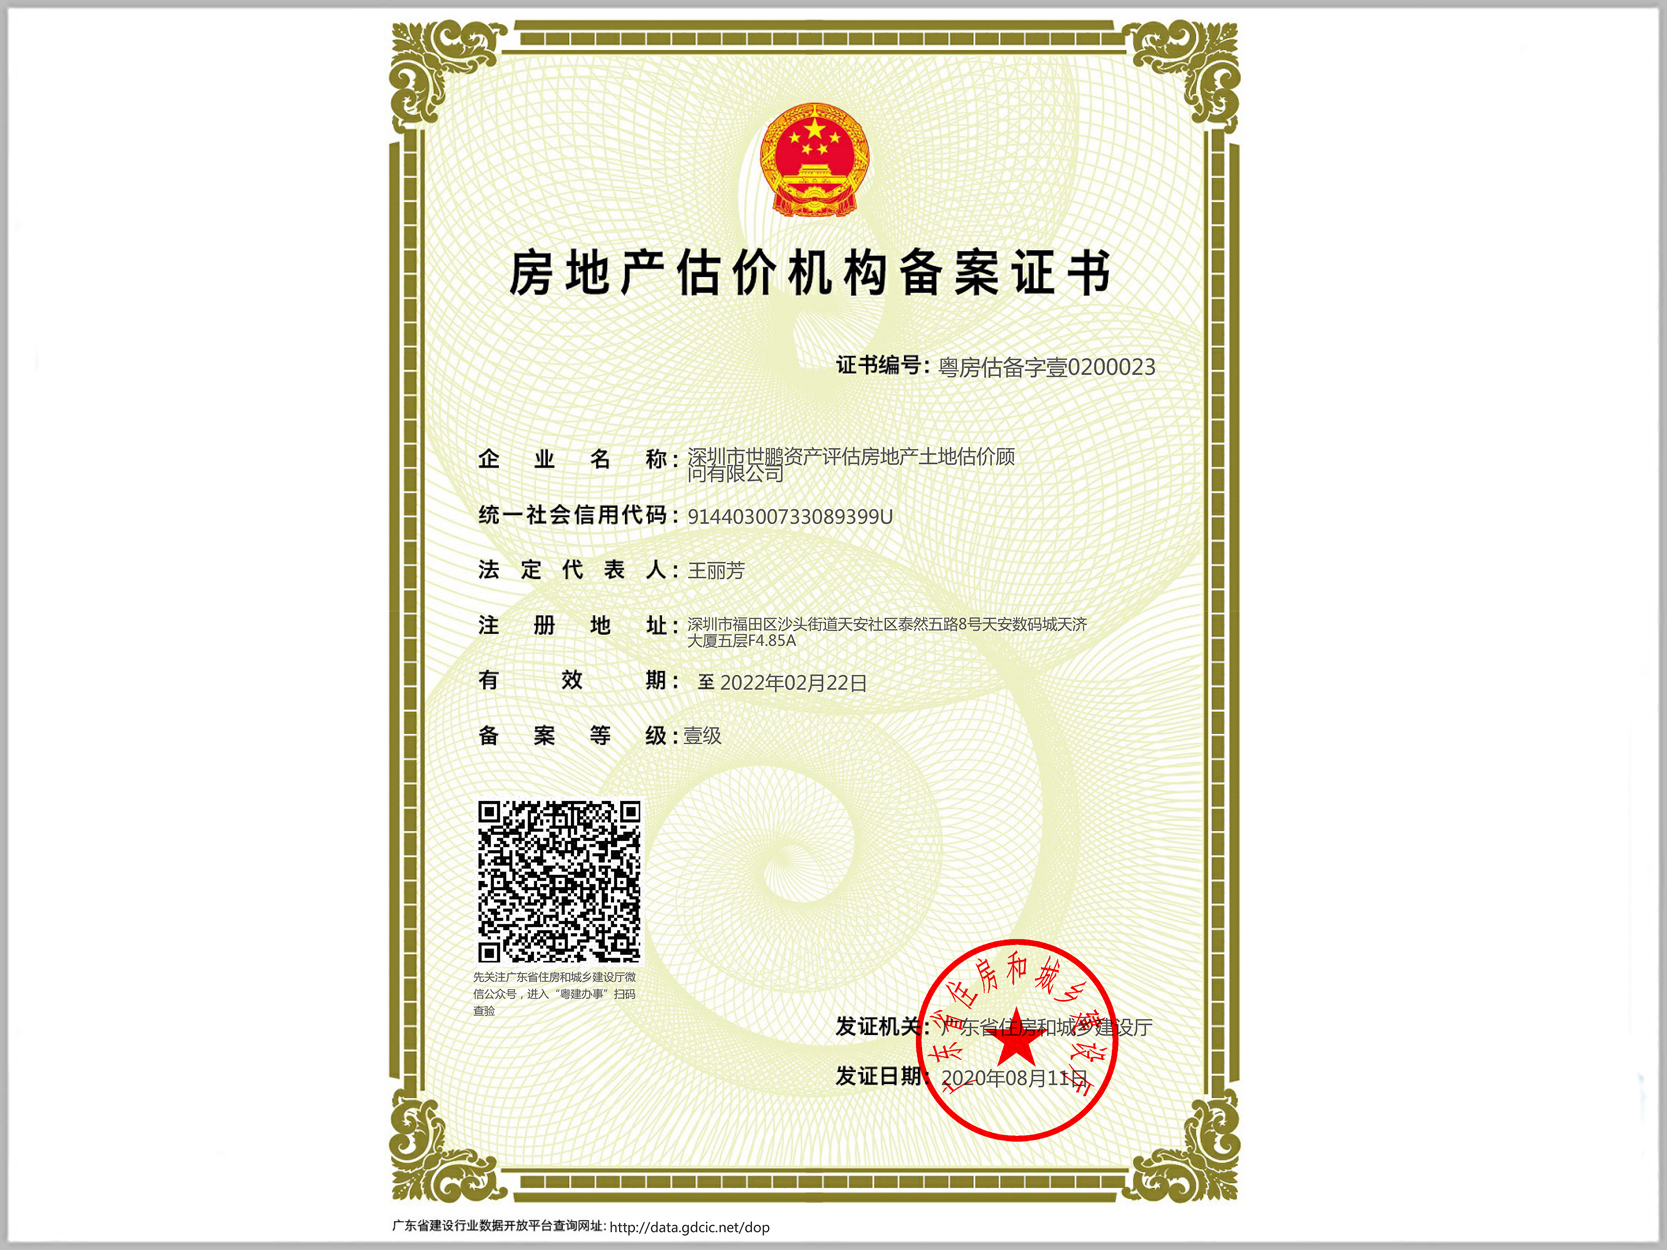 Real estate appraisal agency registration certificate (level one)